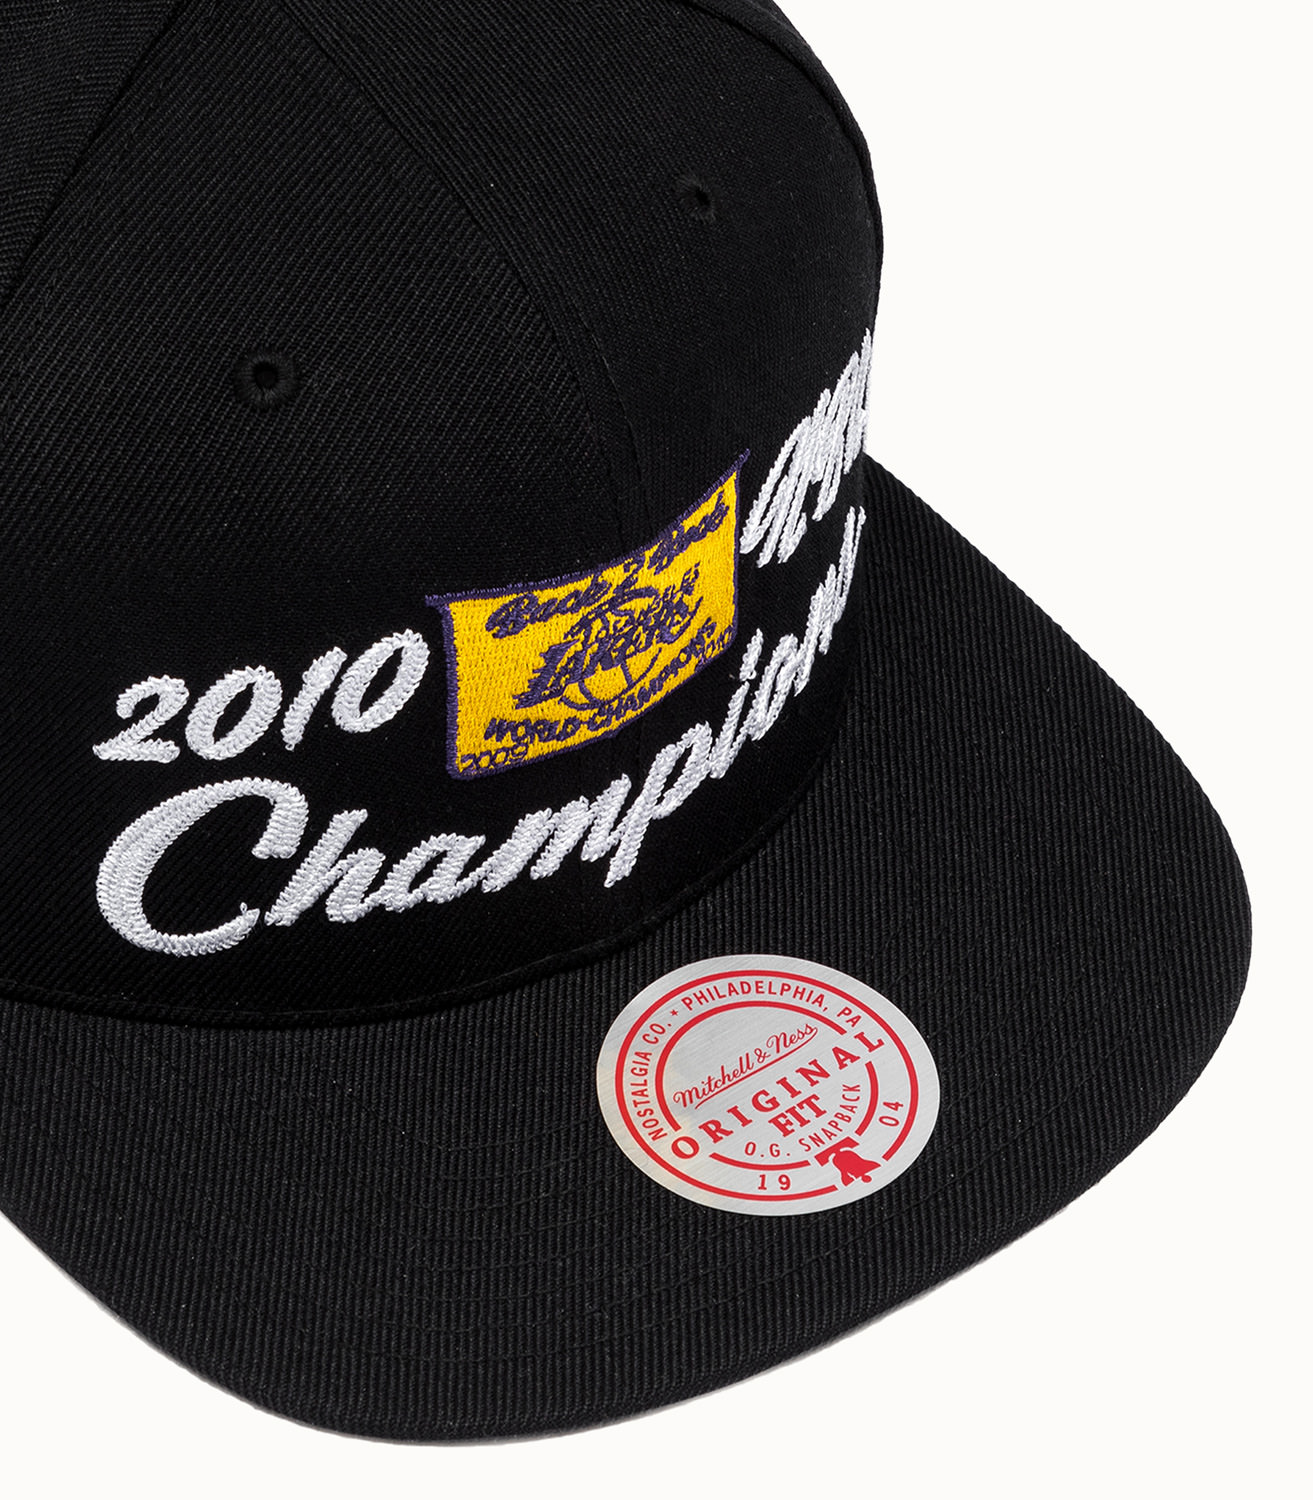 lakers 2010 championship hat